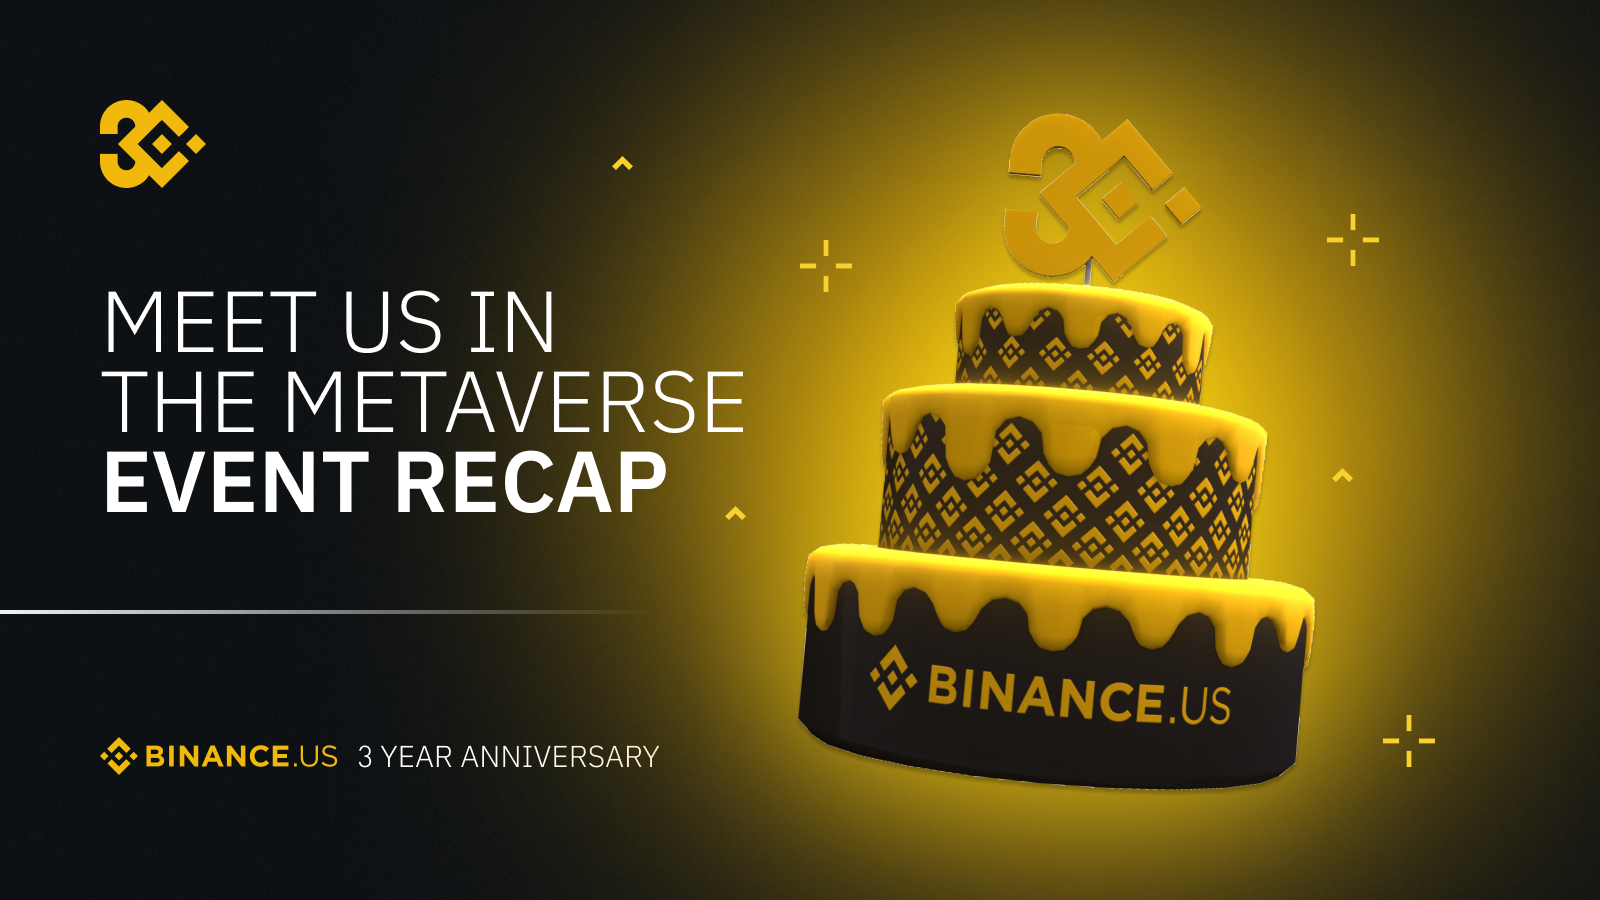 Binance.US 3 Year Anniversary “Meet Us in the Metaverse” | Event Recap